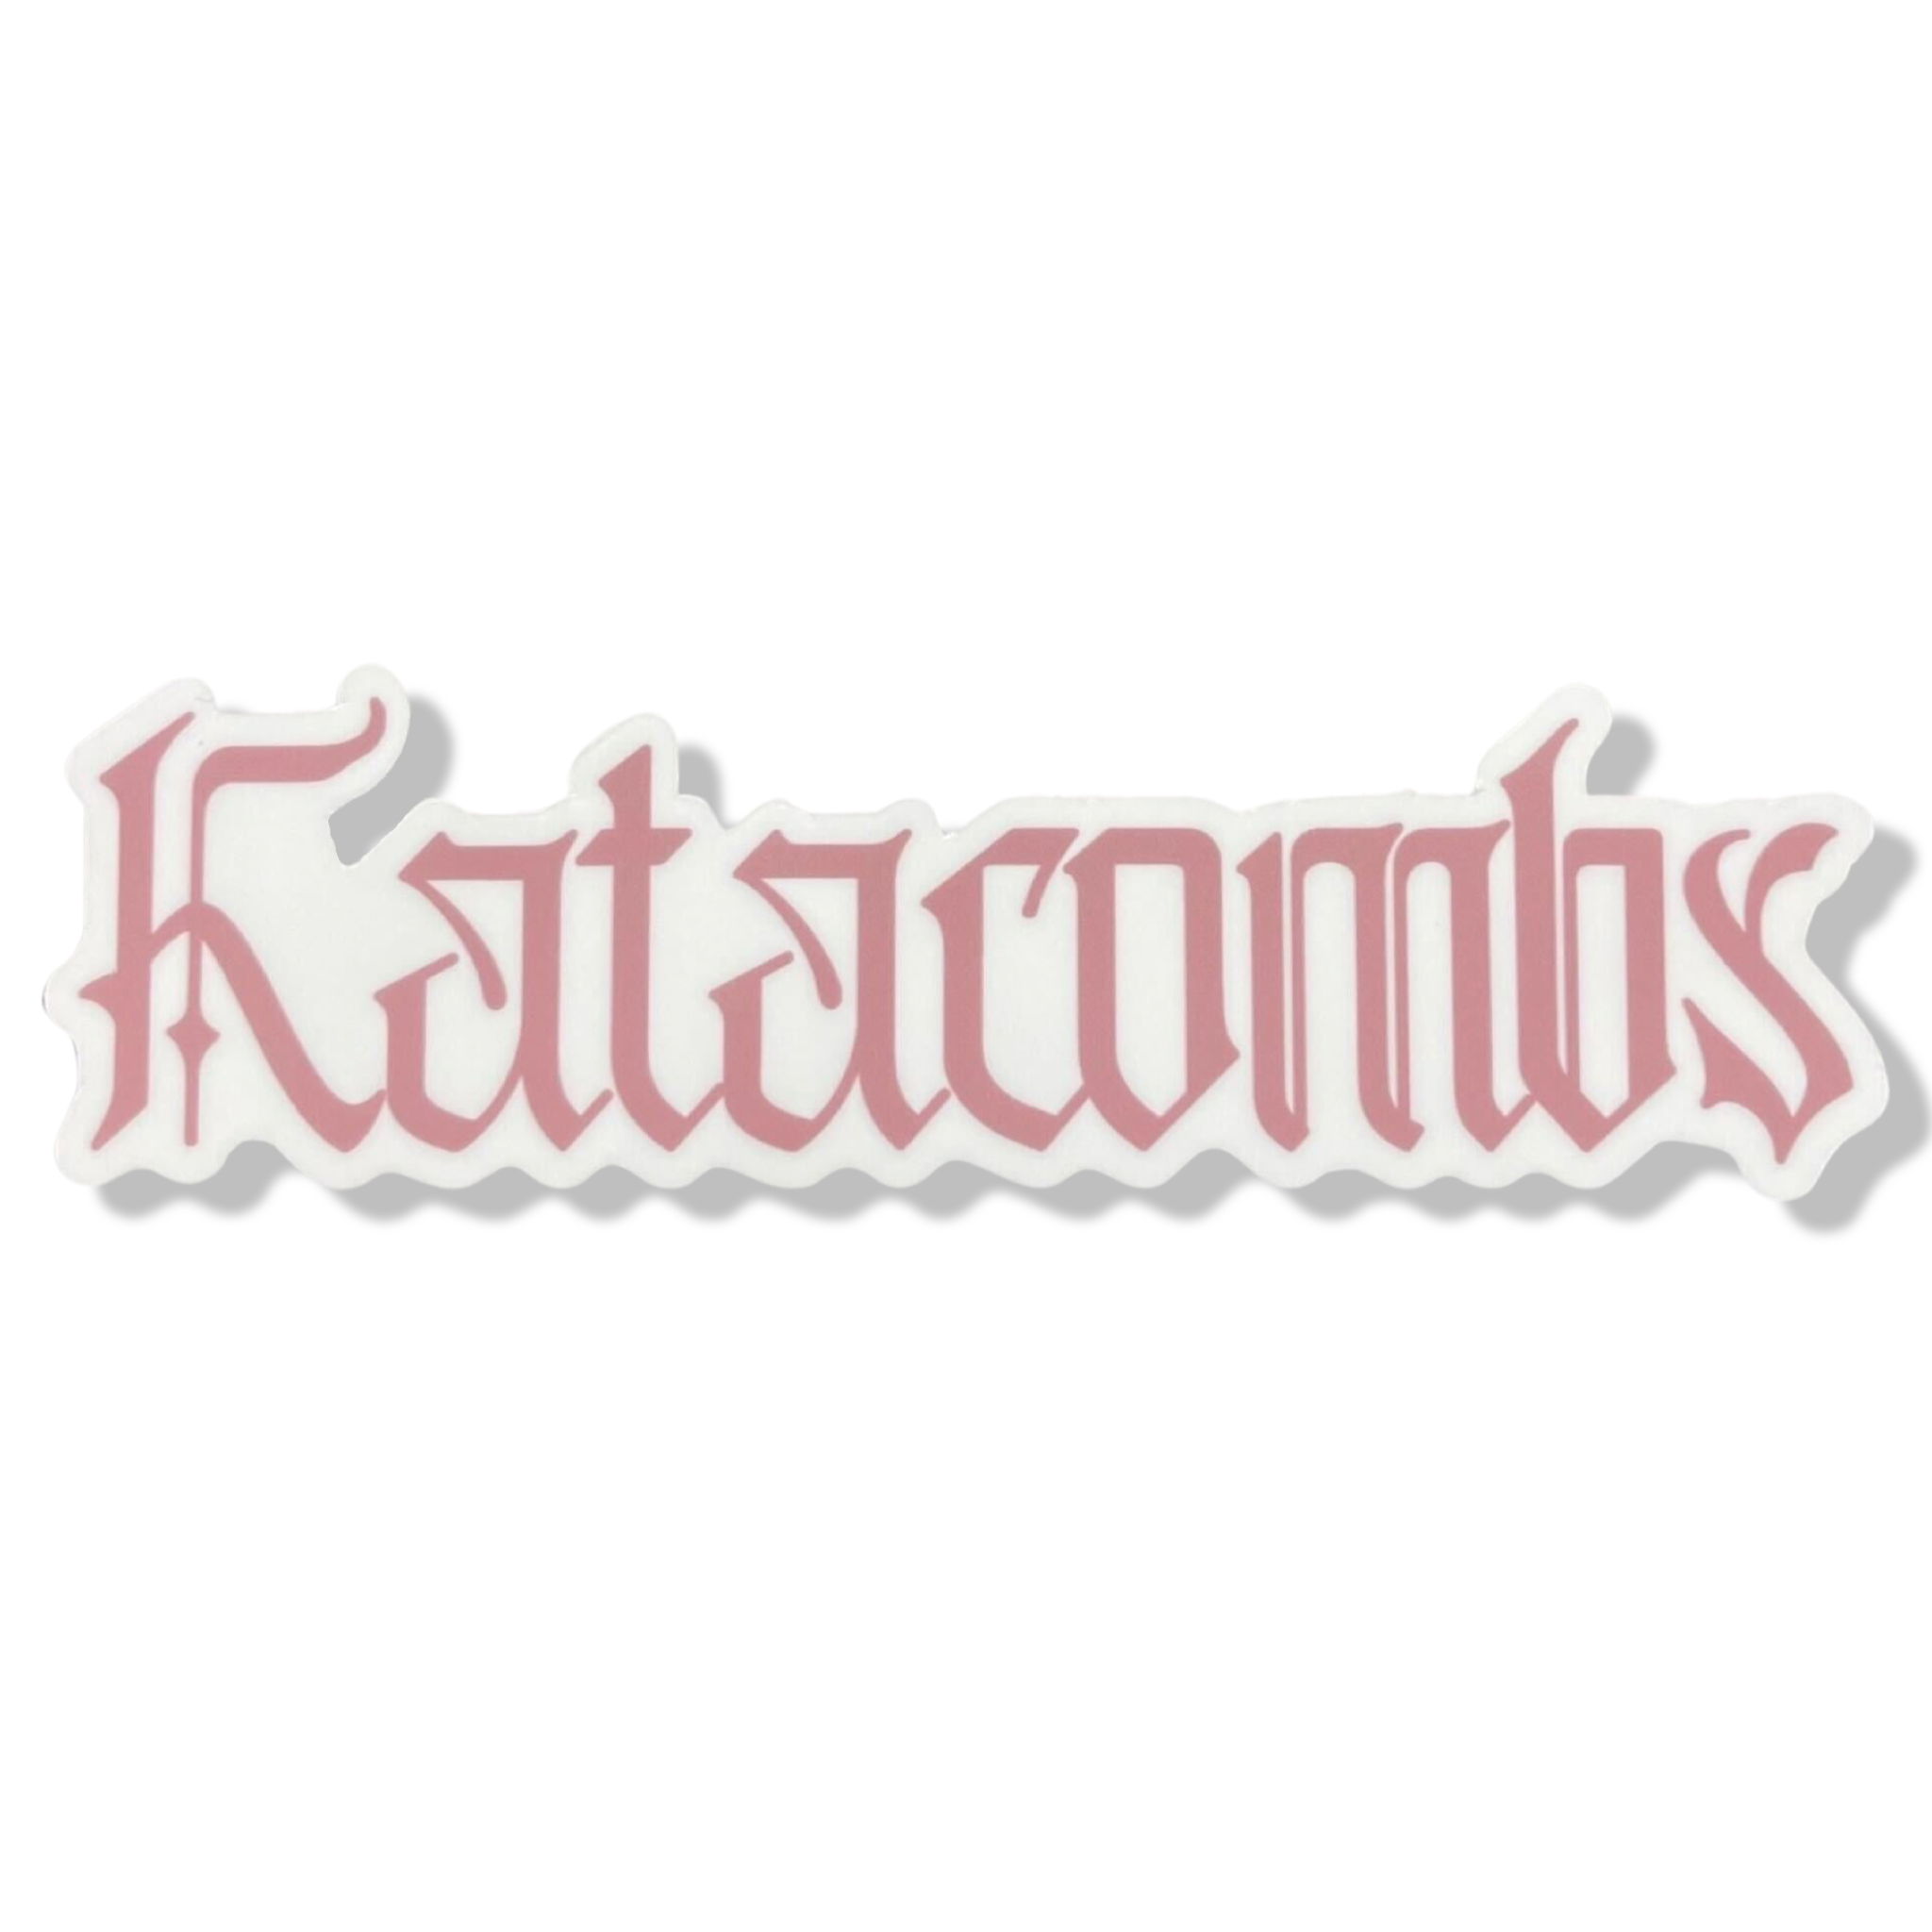 Katacombs Logo Sticker